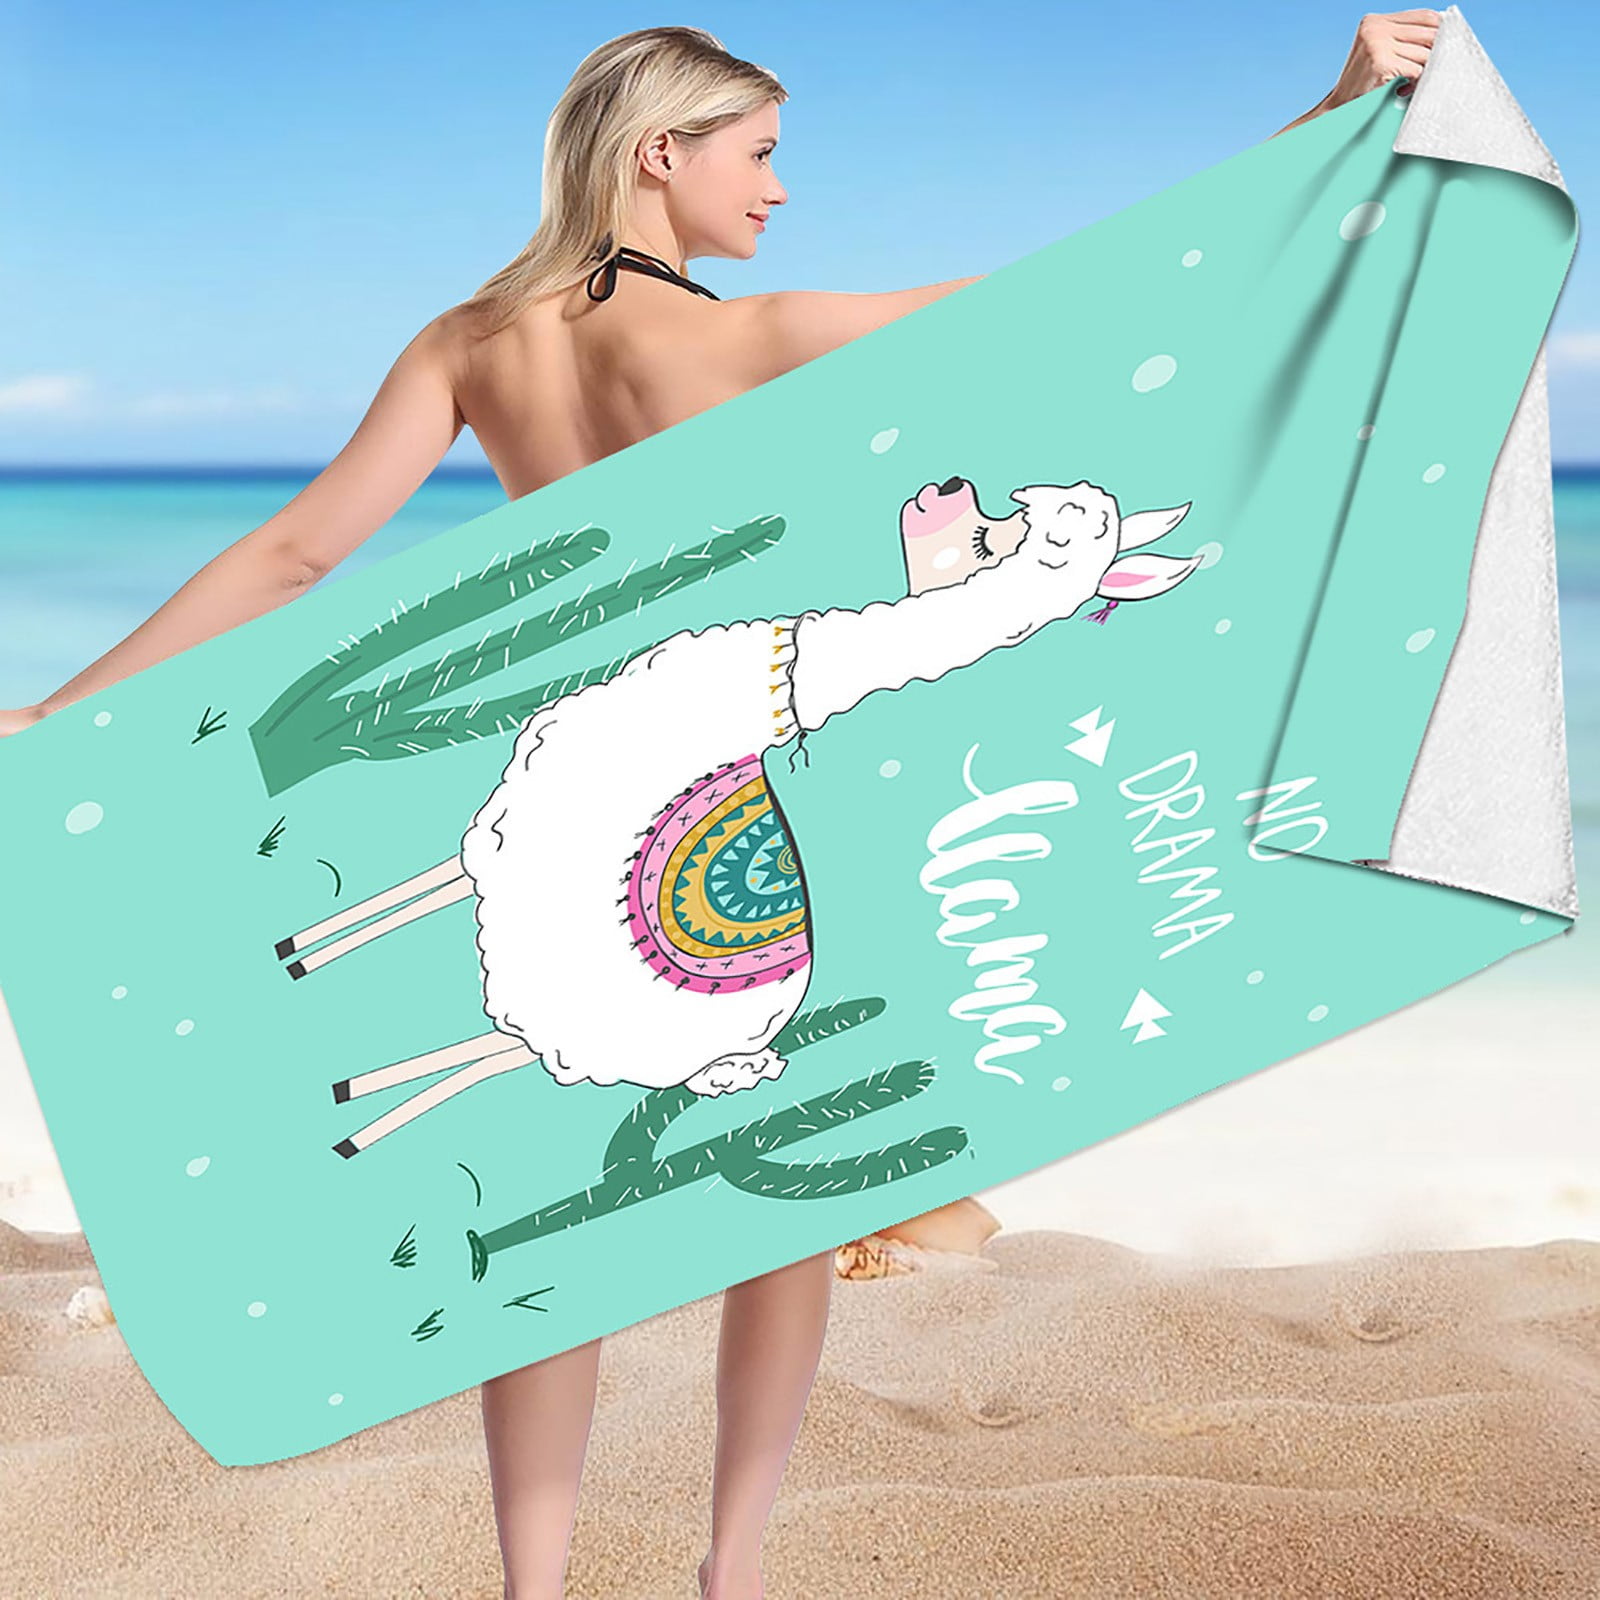 SXCHEN Beach Towel Oversized 36x72 Thin Lightweight Extra Large Absorbent Quick Dry Sand Free Plush Cool Hawaiian Print Summer Starfish Conch